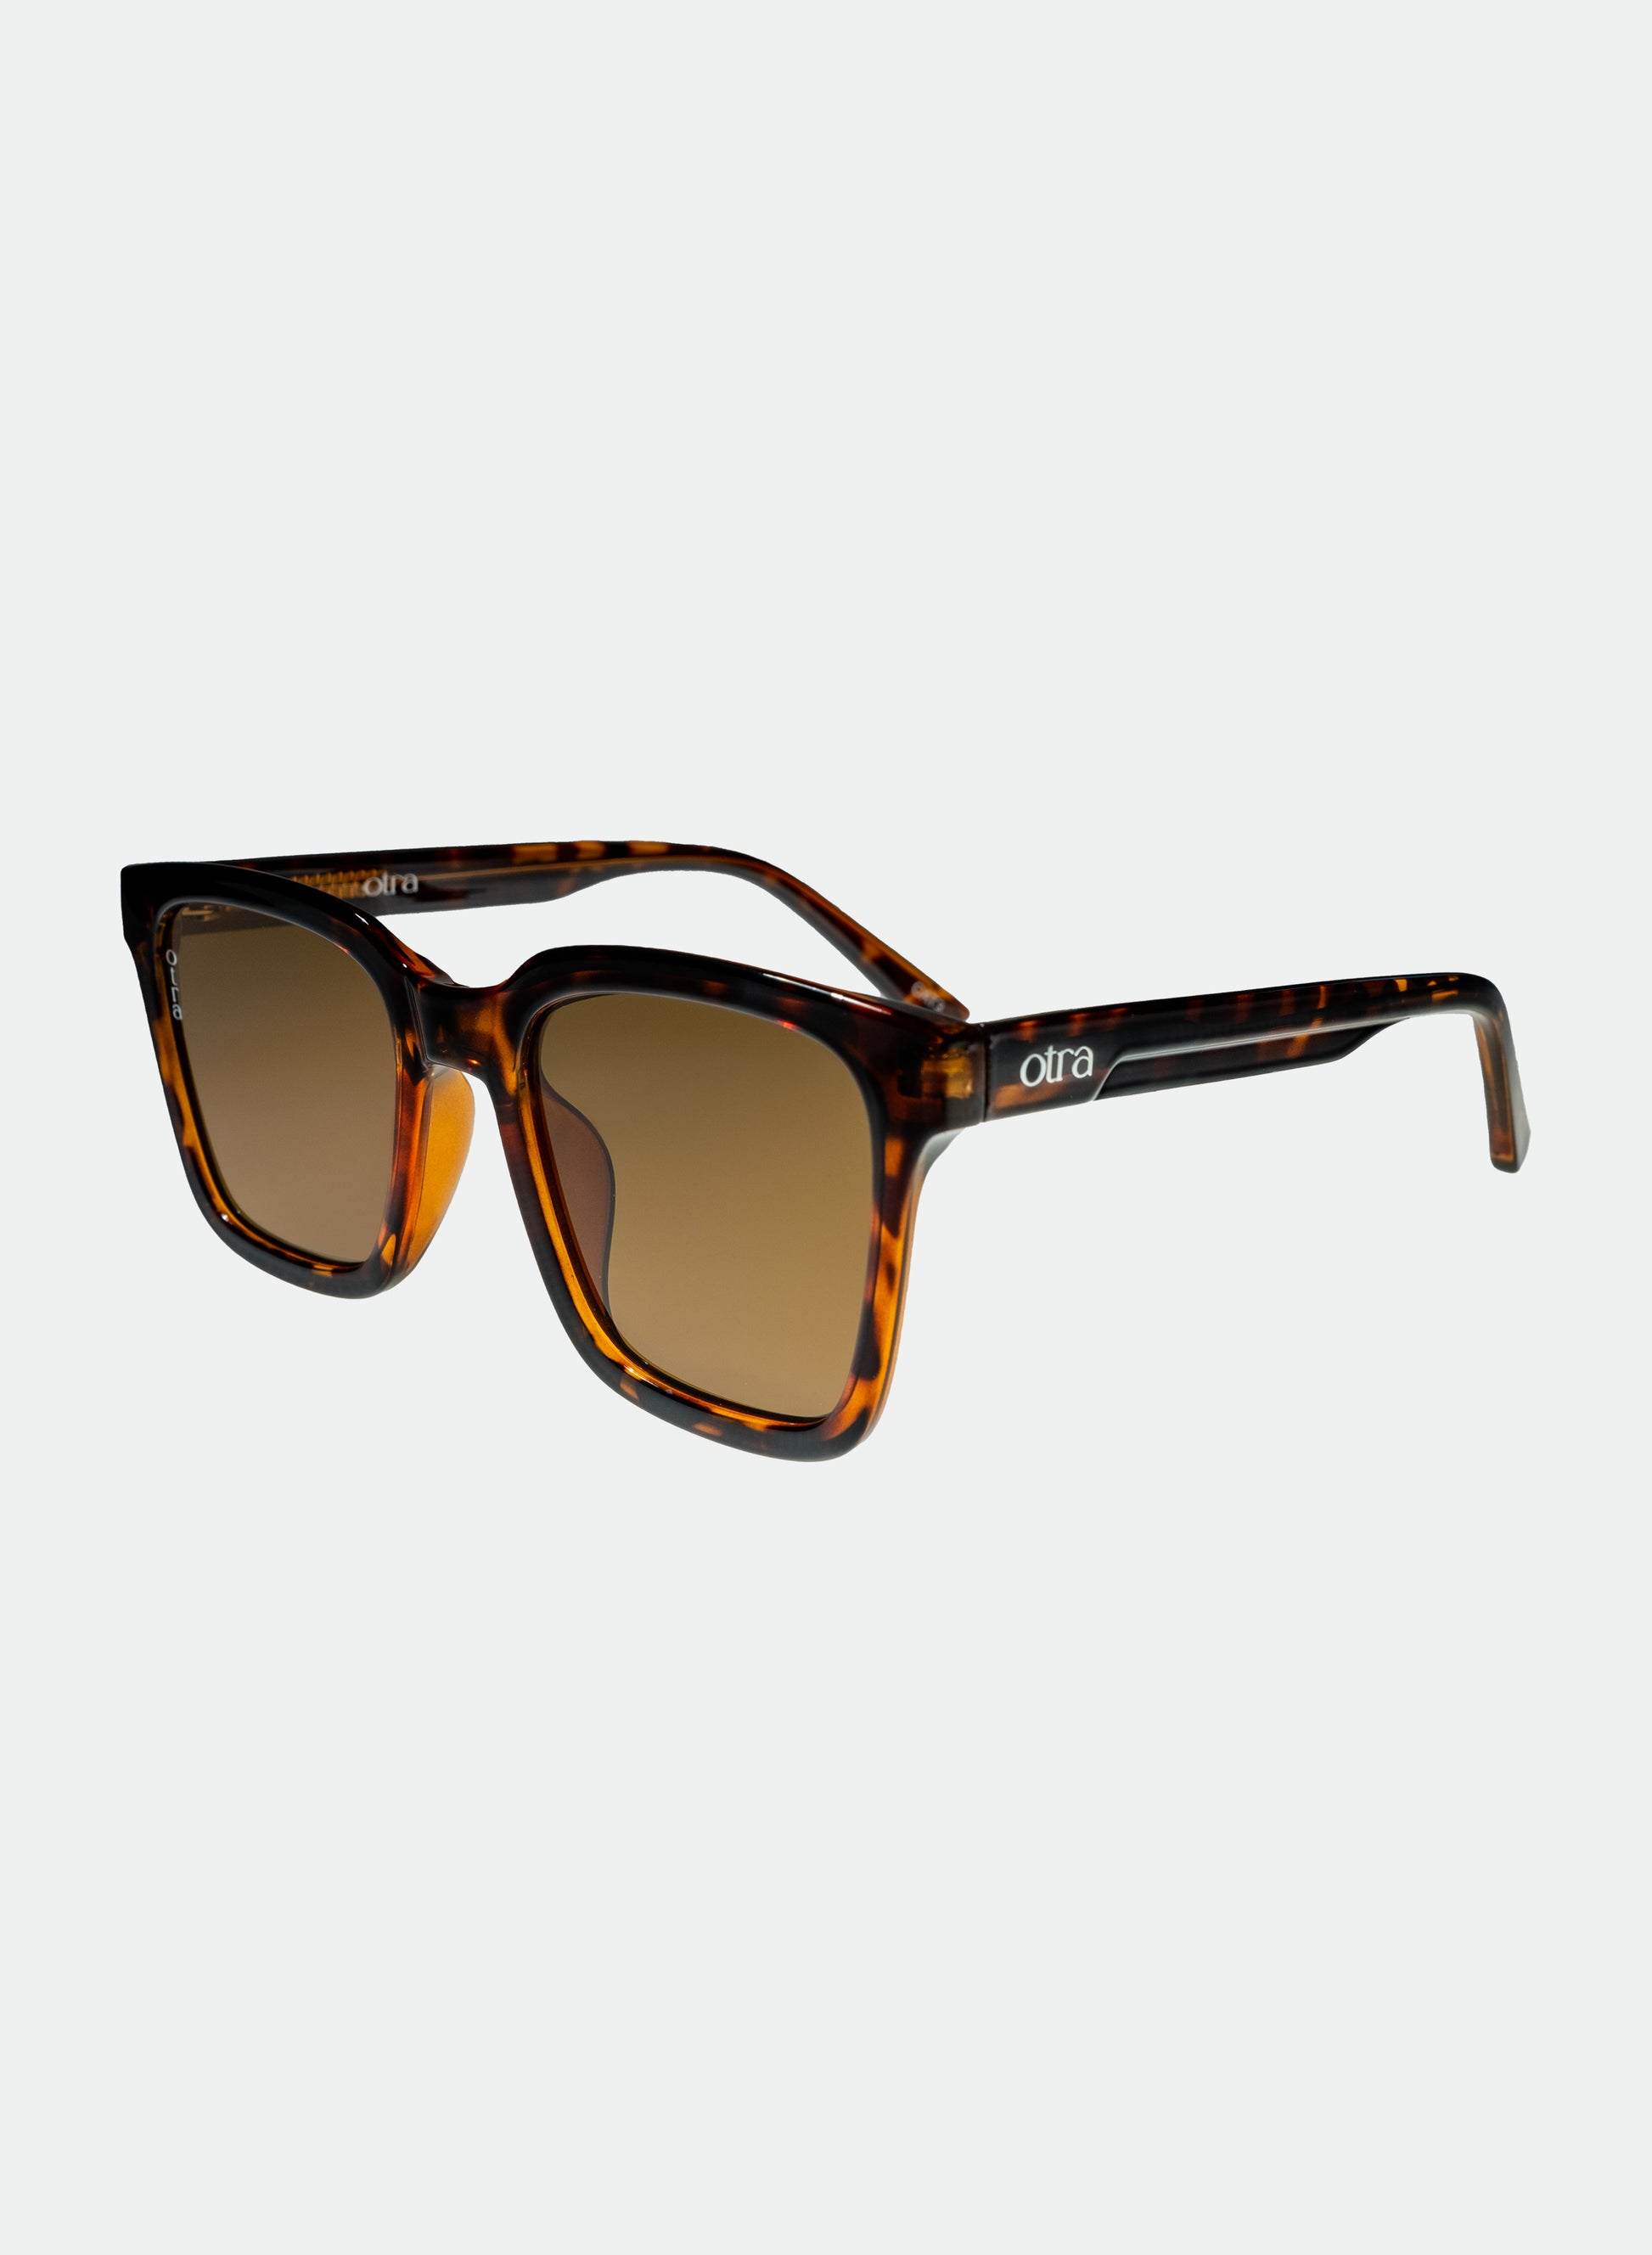 Side view of Fyn sunglasses in brown tortoiseshell